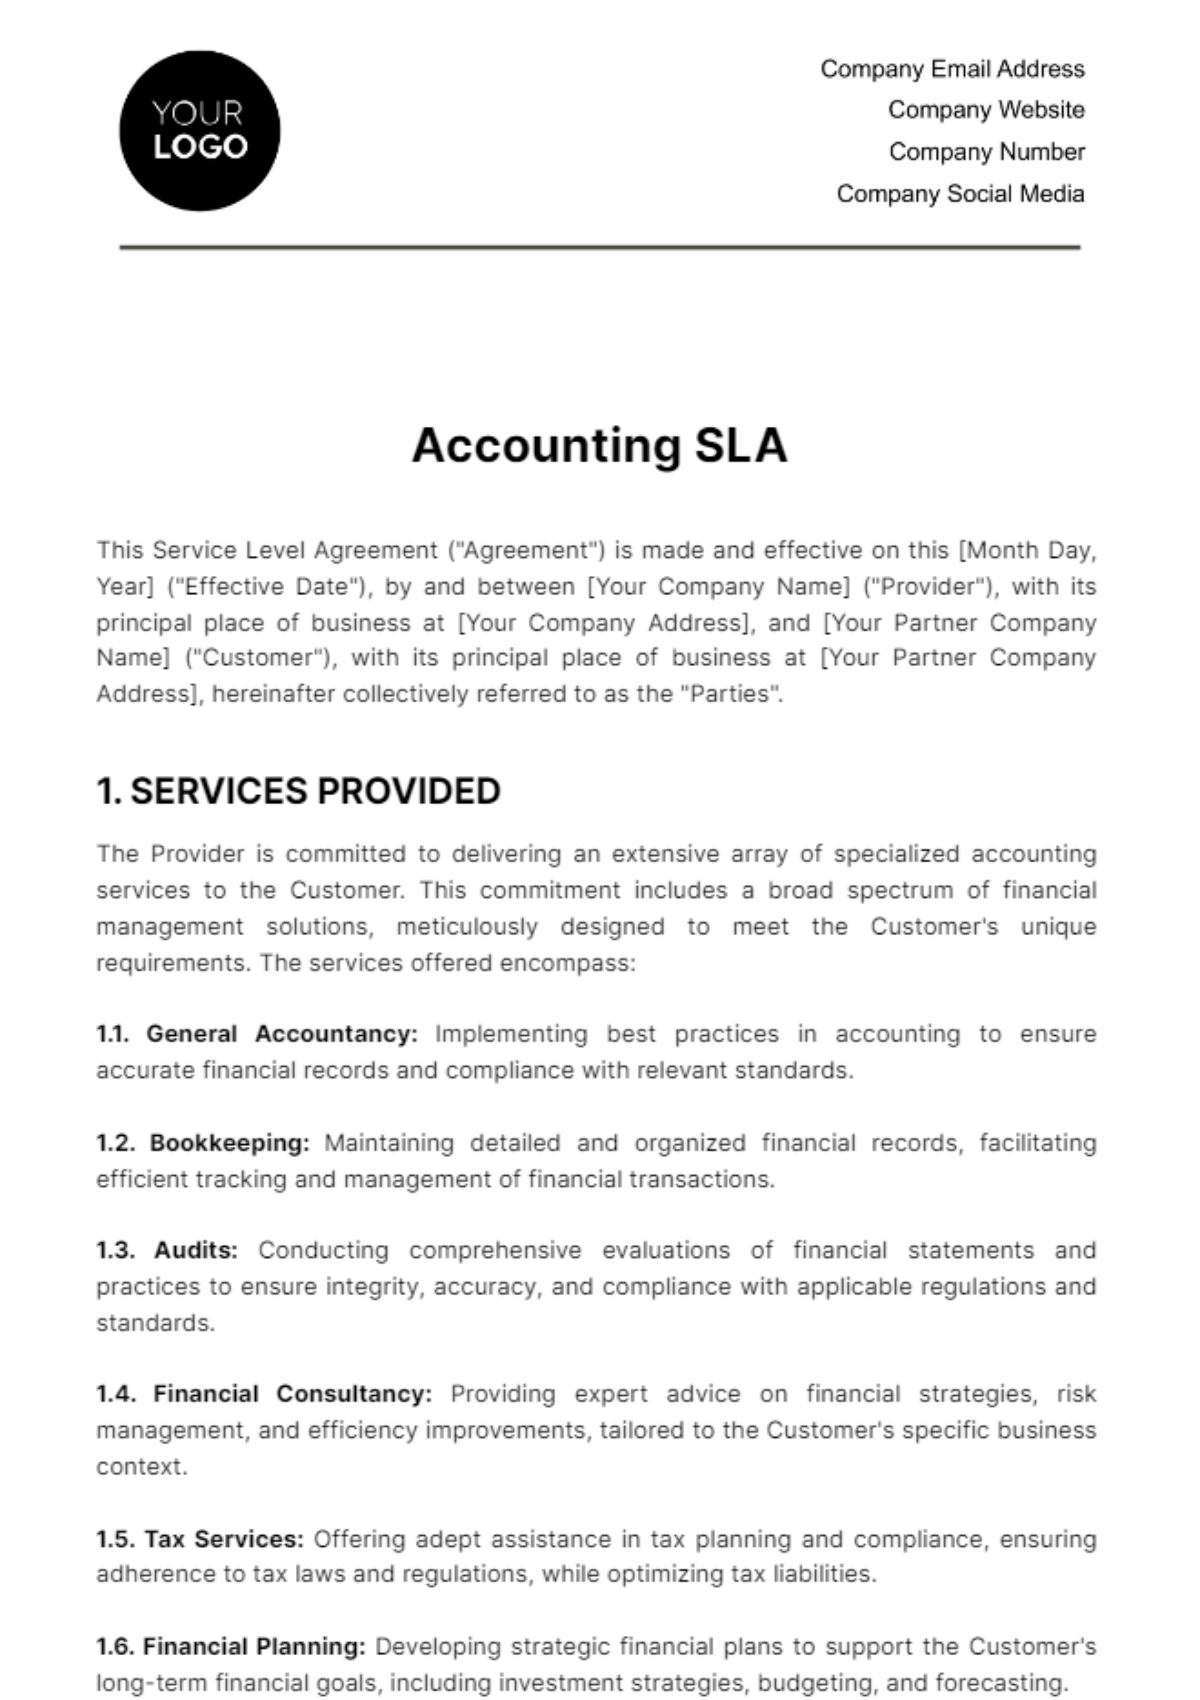 Accounting SLA Template